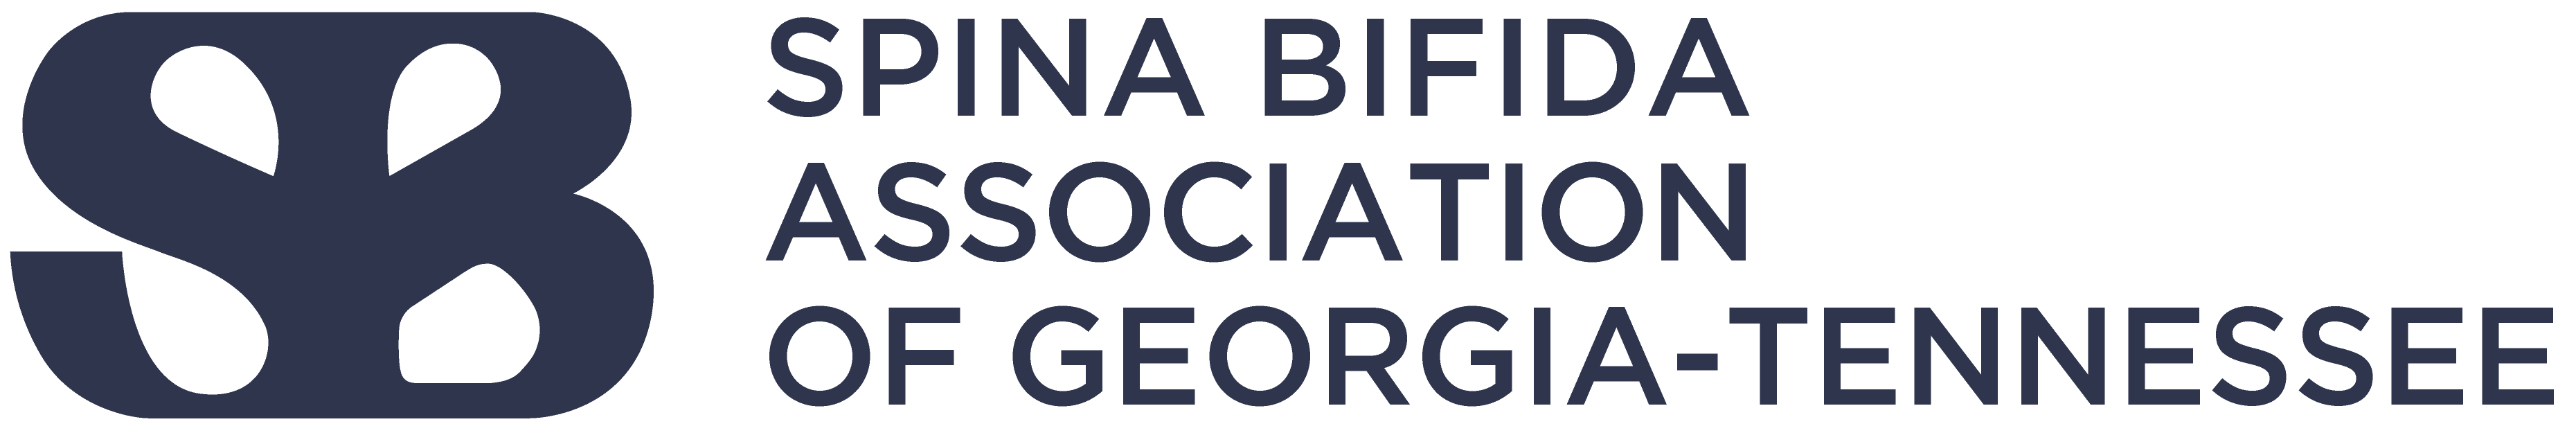 Spina Bifida Association of Georgia-Tennessee logo